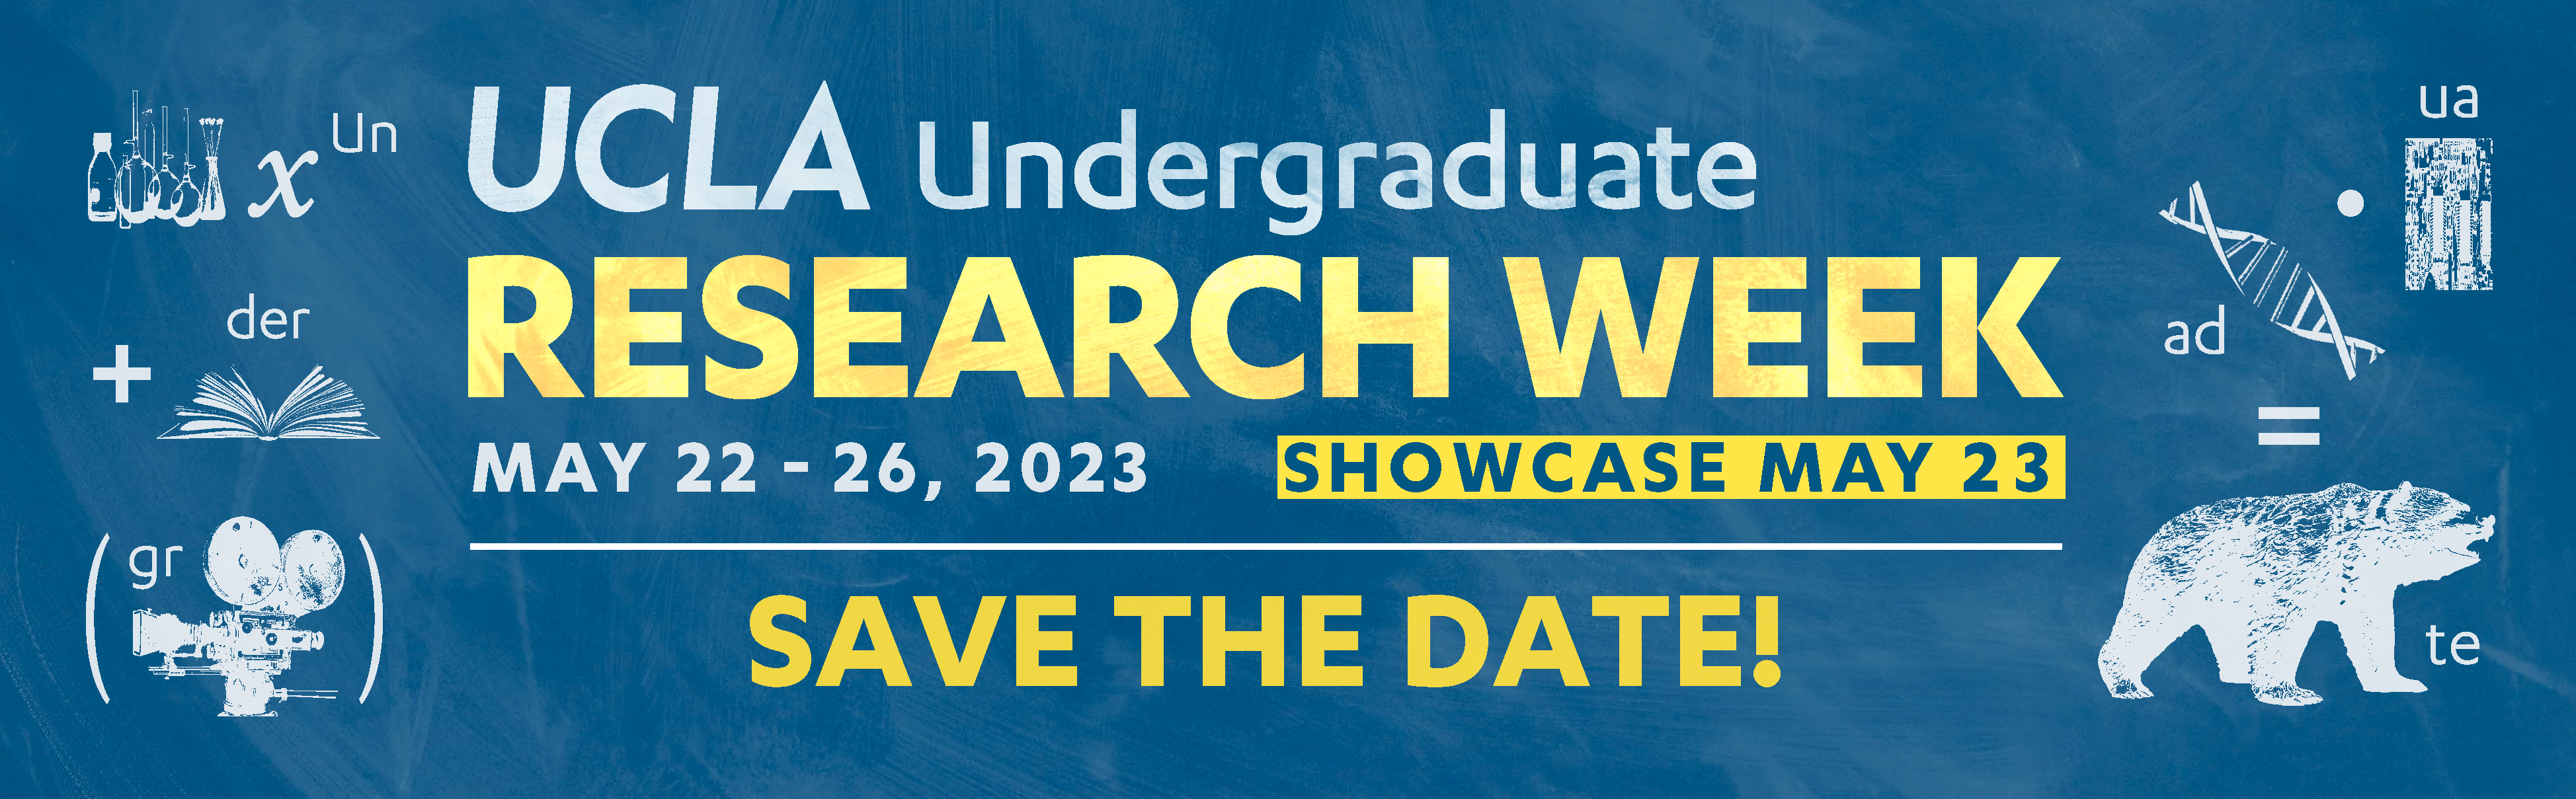 UCLA Undergraduate Research Week